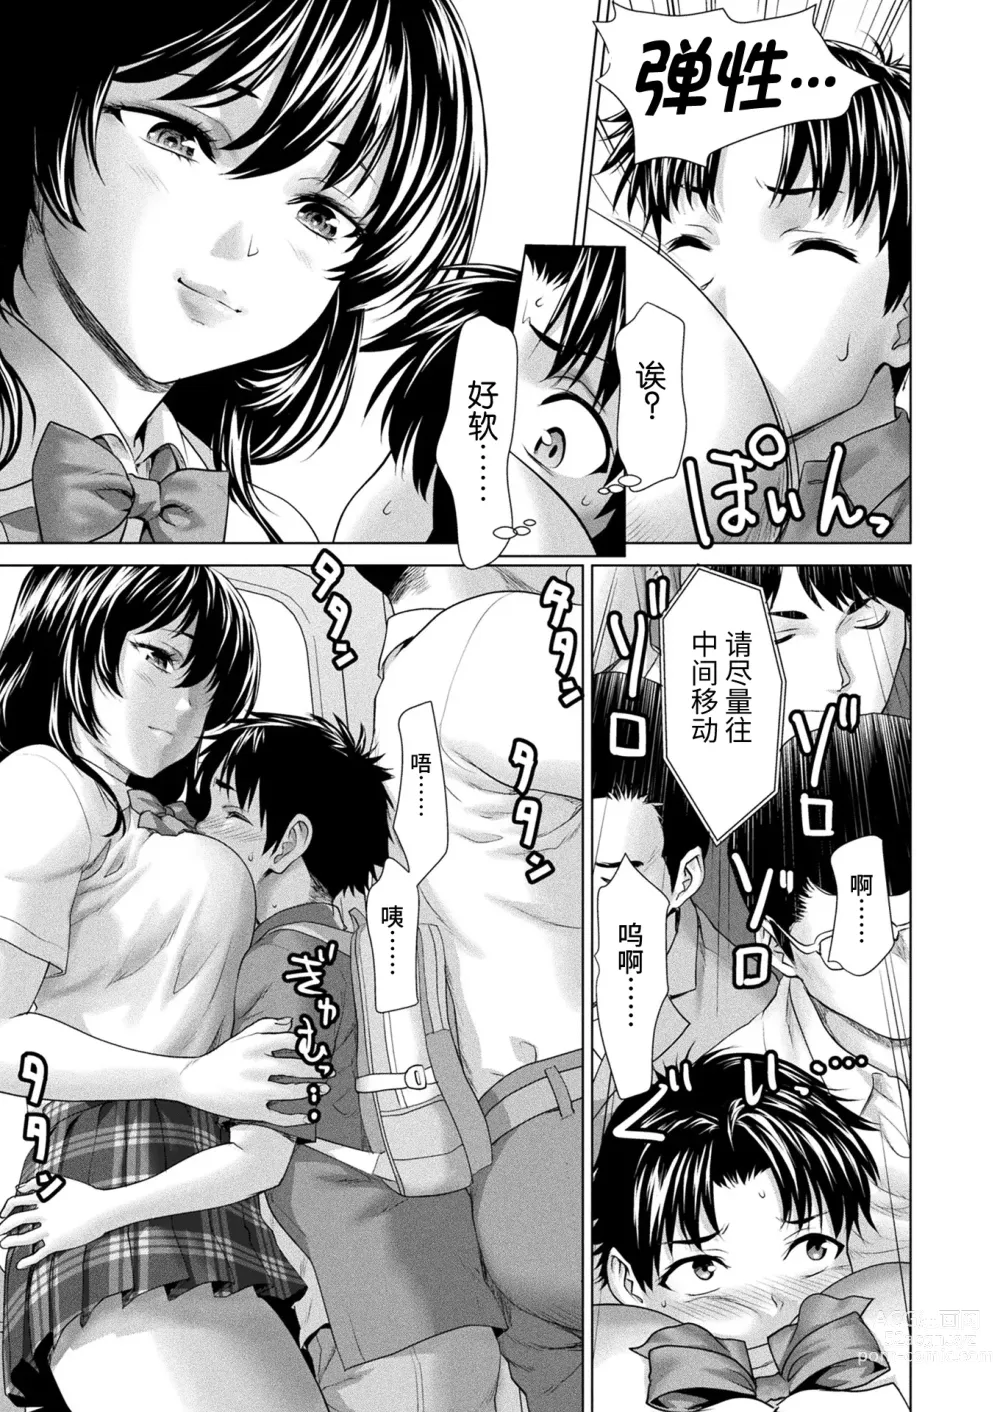 Page 3 of manga Kitsune Eki